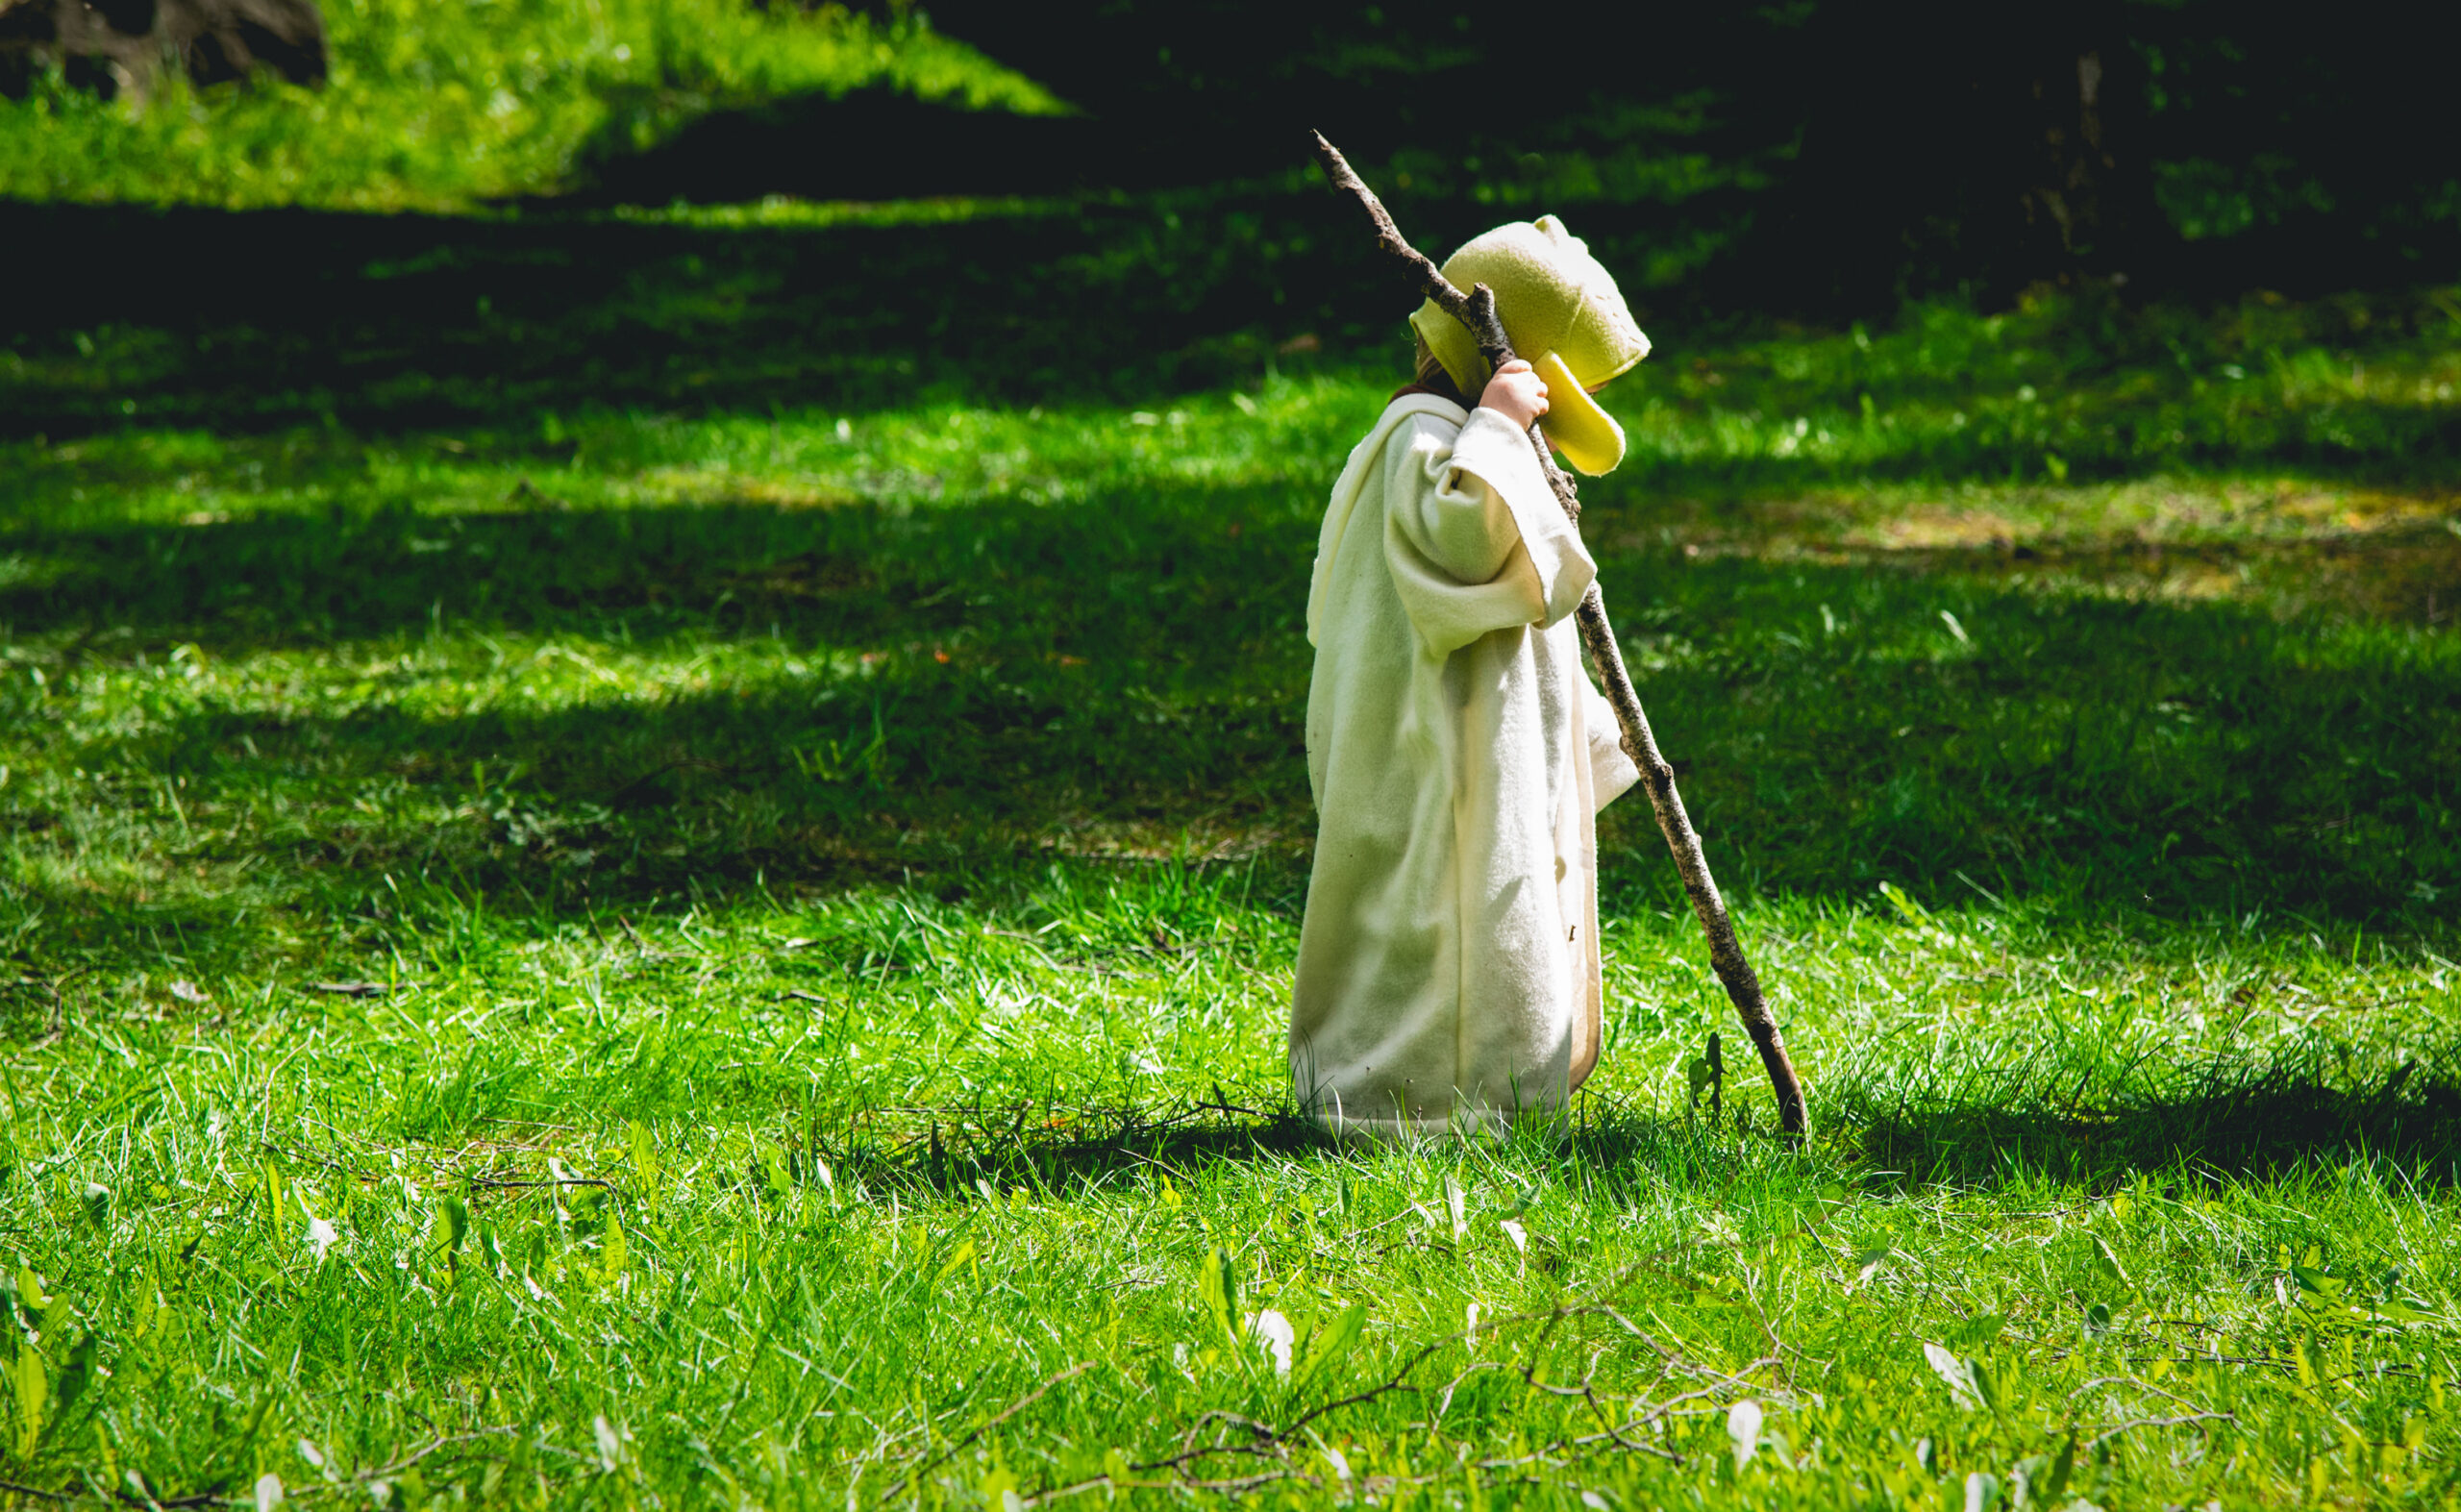 Boy wearing a Yoda costume in a lawn 